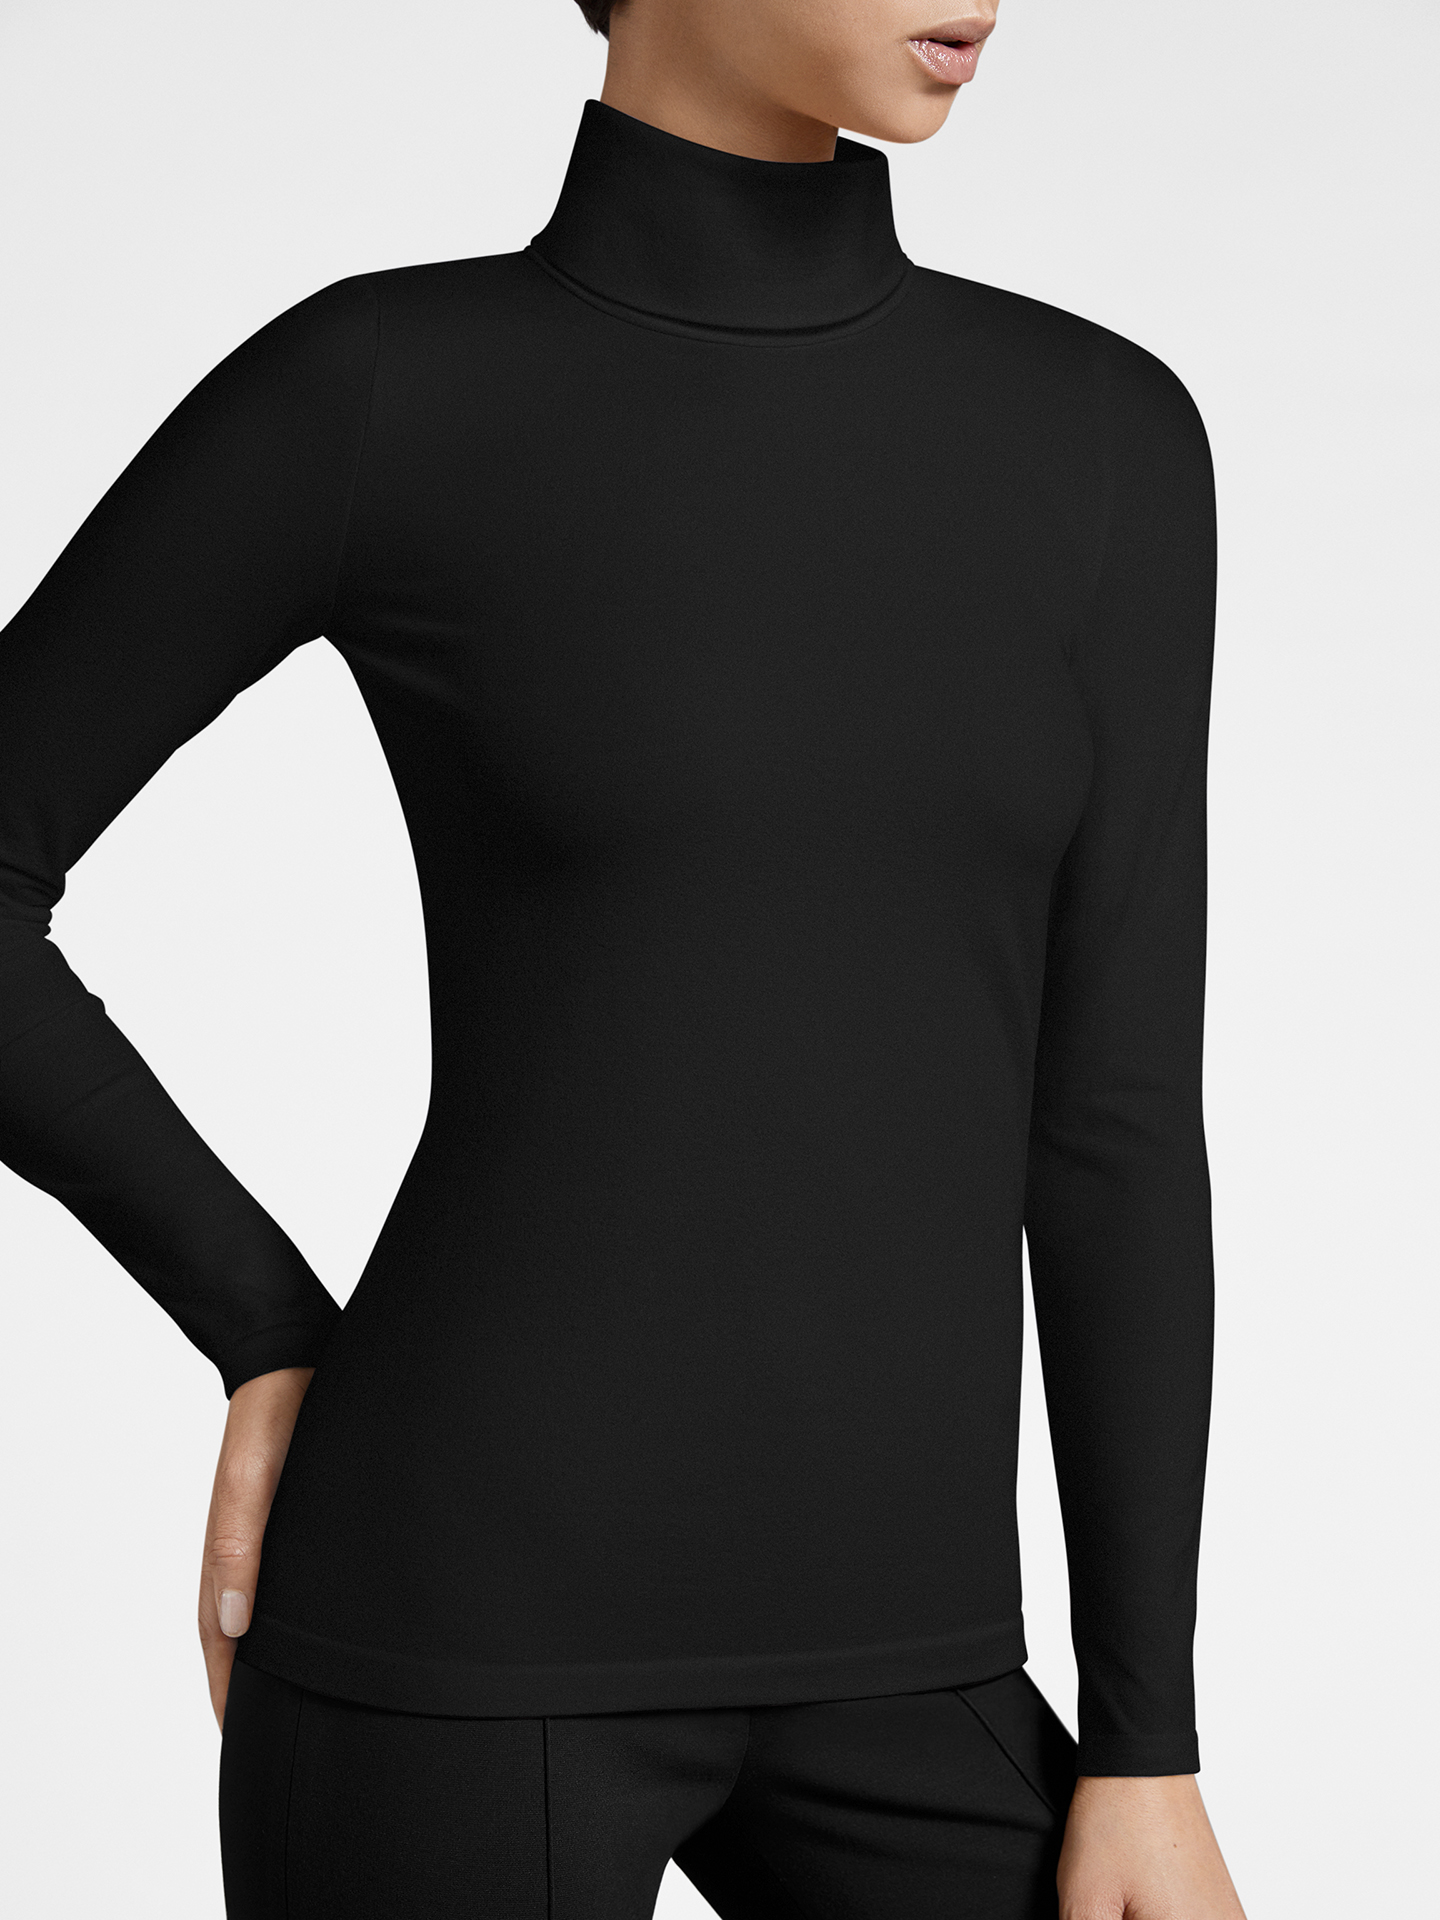 Wolford - Turtleneck Top Long Sleeves, Frau, black, Größe: L günstig online kaufen